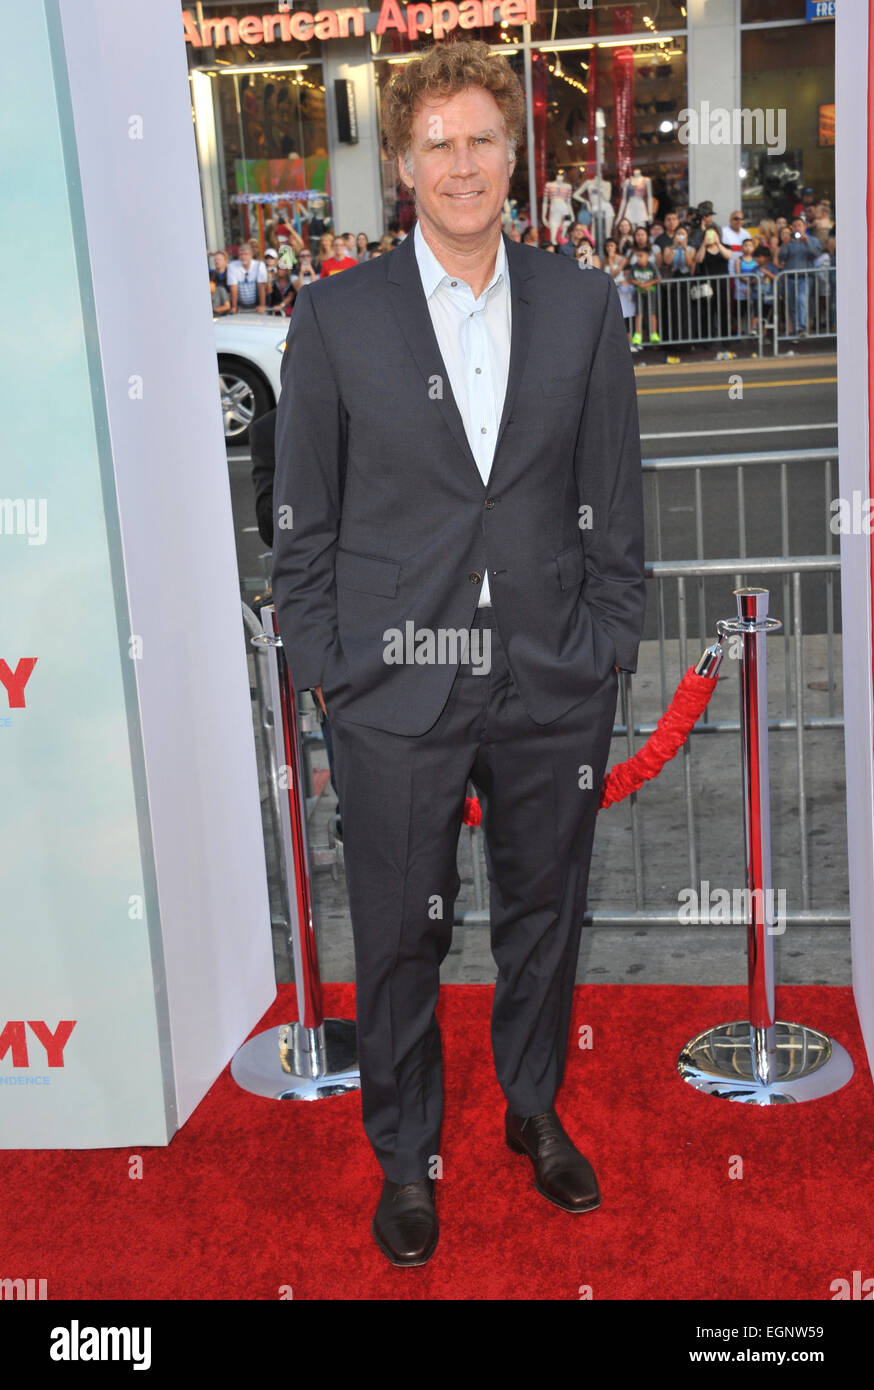 LOS ANGELES, CA - 30. Juni 2014: Will Ferrell bei der Premiere von "Tammy" am TCL Chinese Theatre in Hollywood. Stockfoto